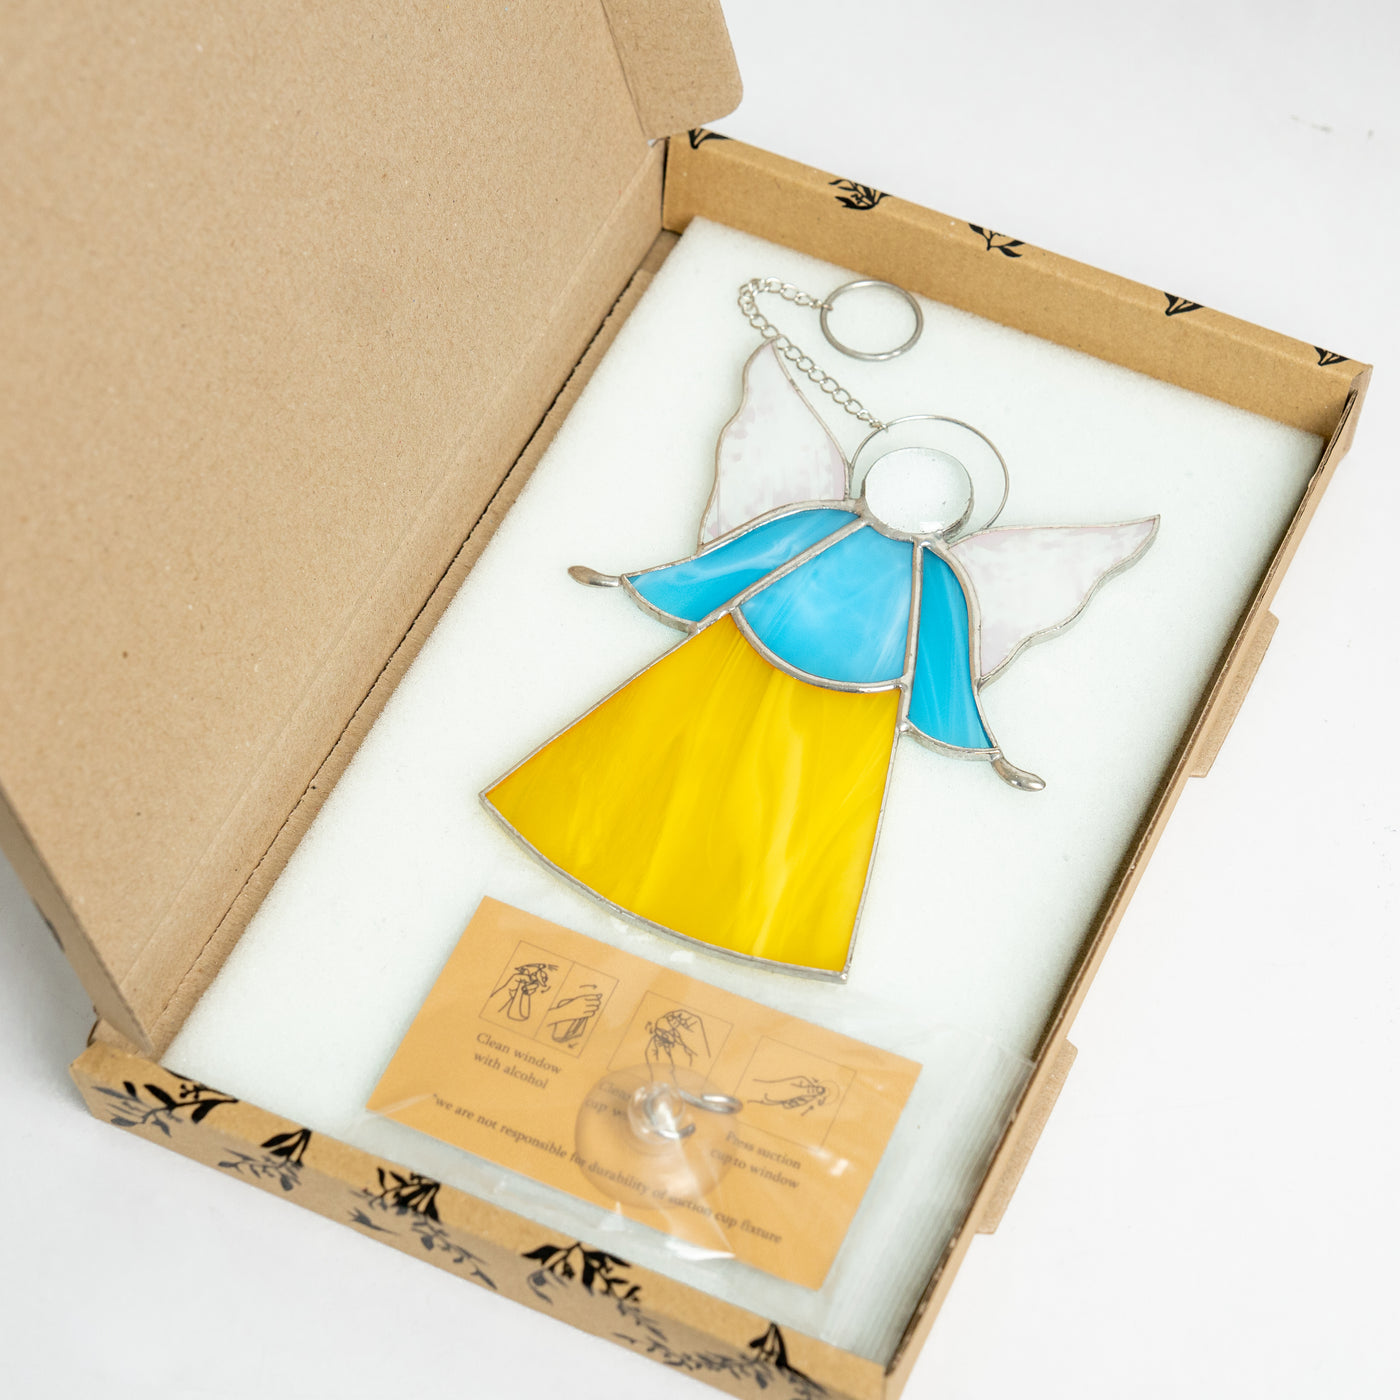 Stained glass Ukrainian angel suncatcher in a brand box